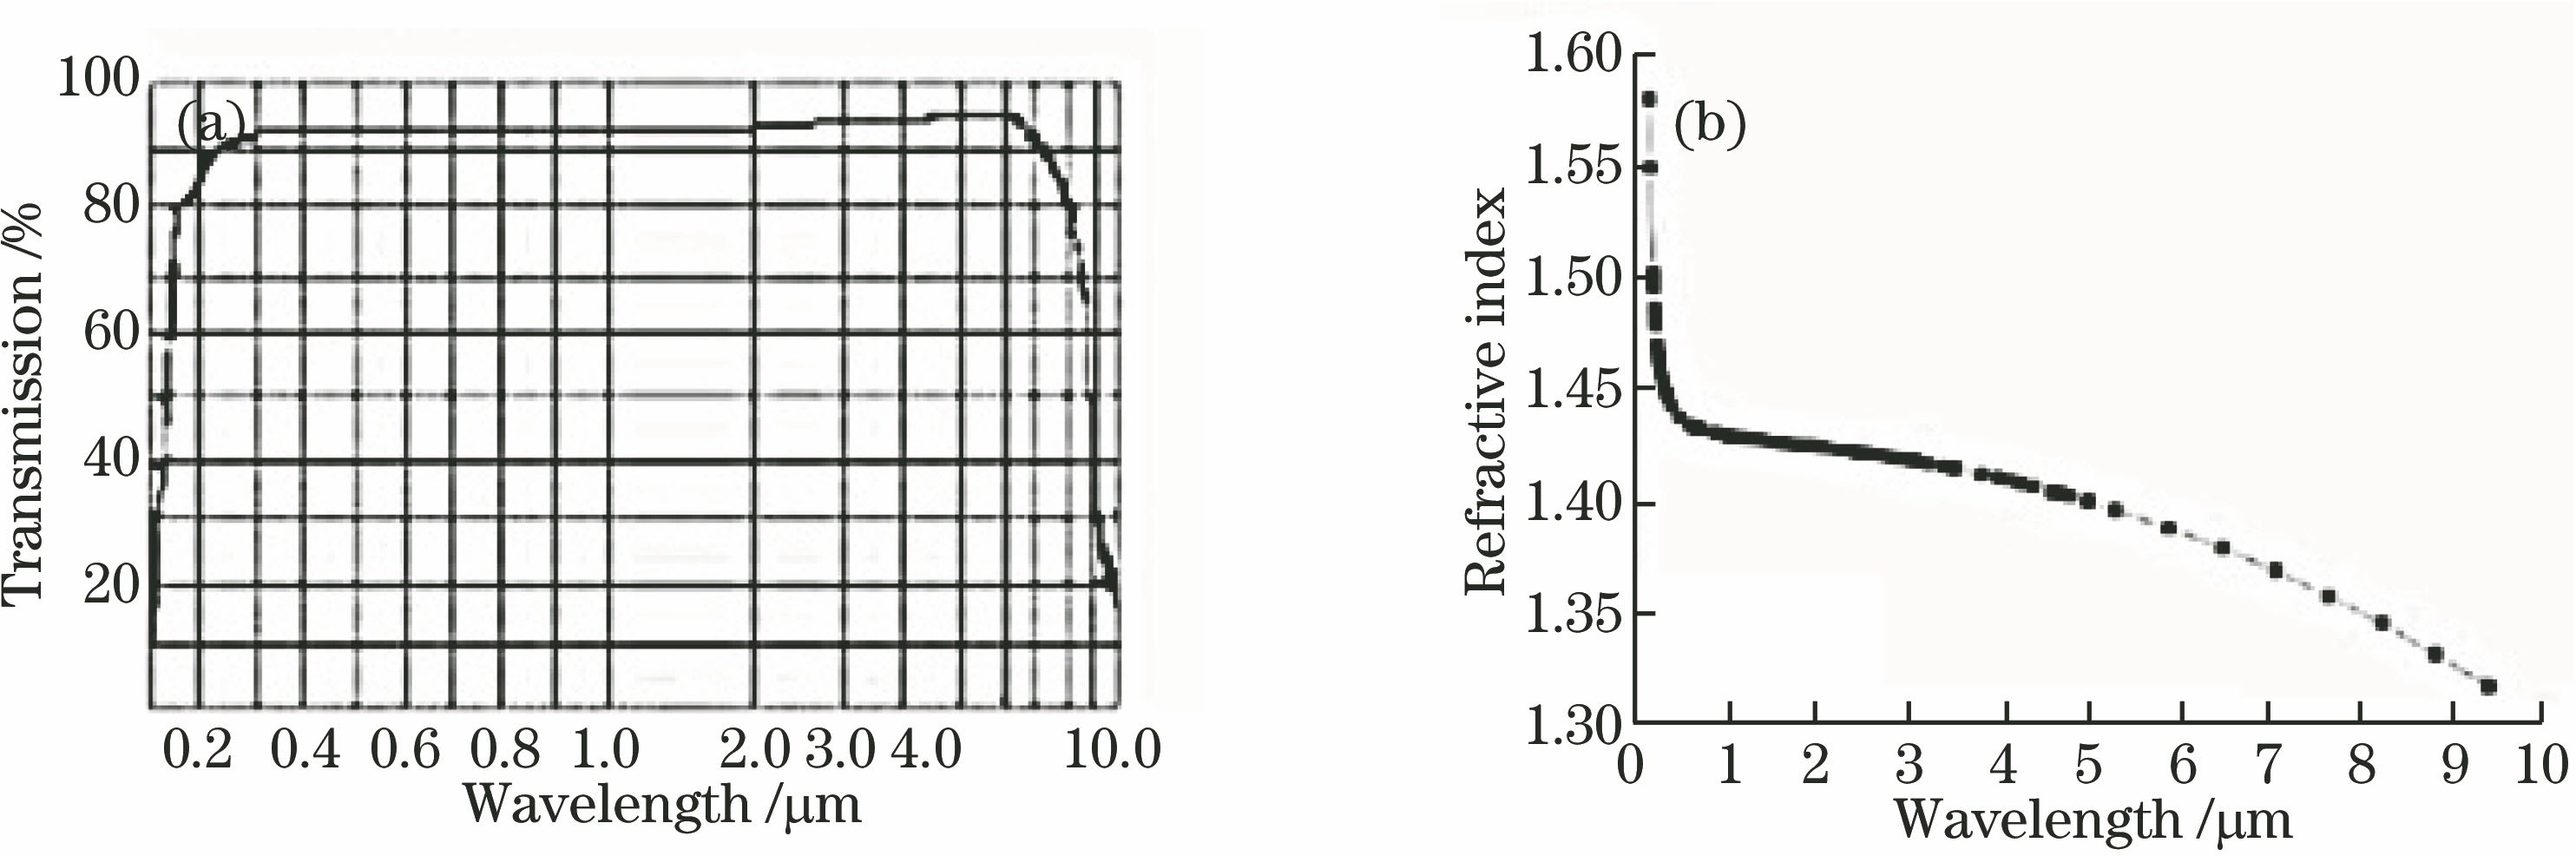 CaF2 crystal. (a) Transmission spectrum; (b) relationship between refractive index and wavelength[4]